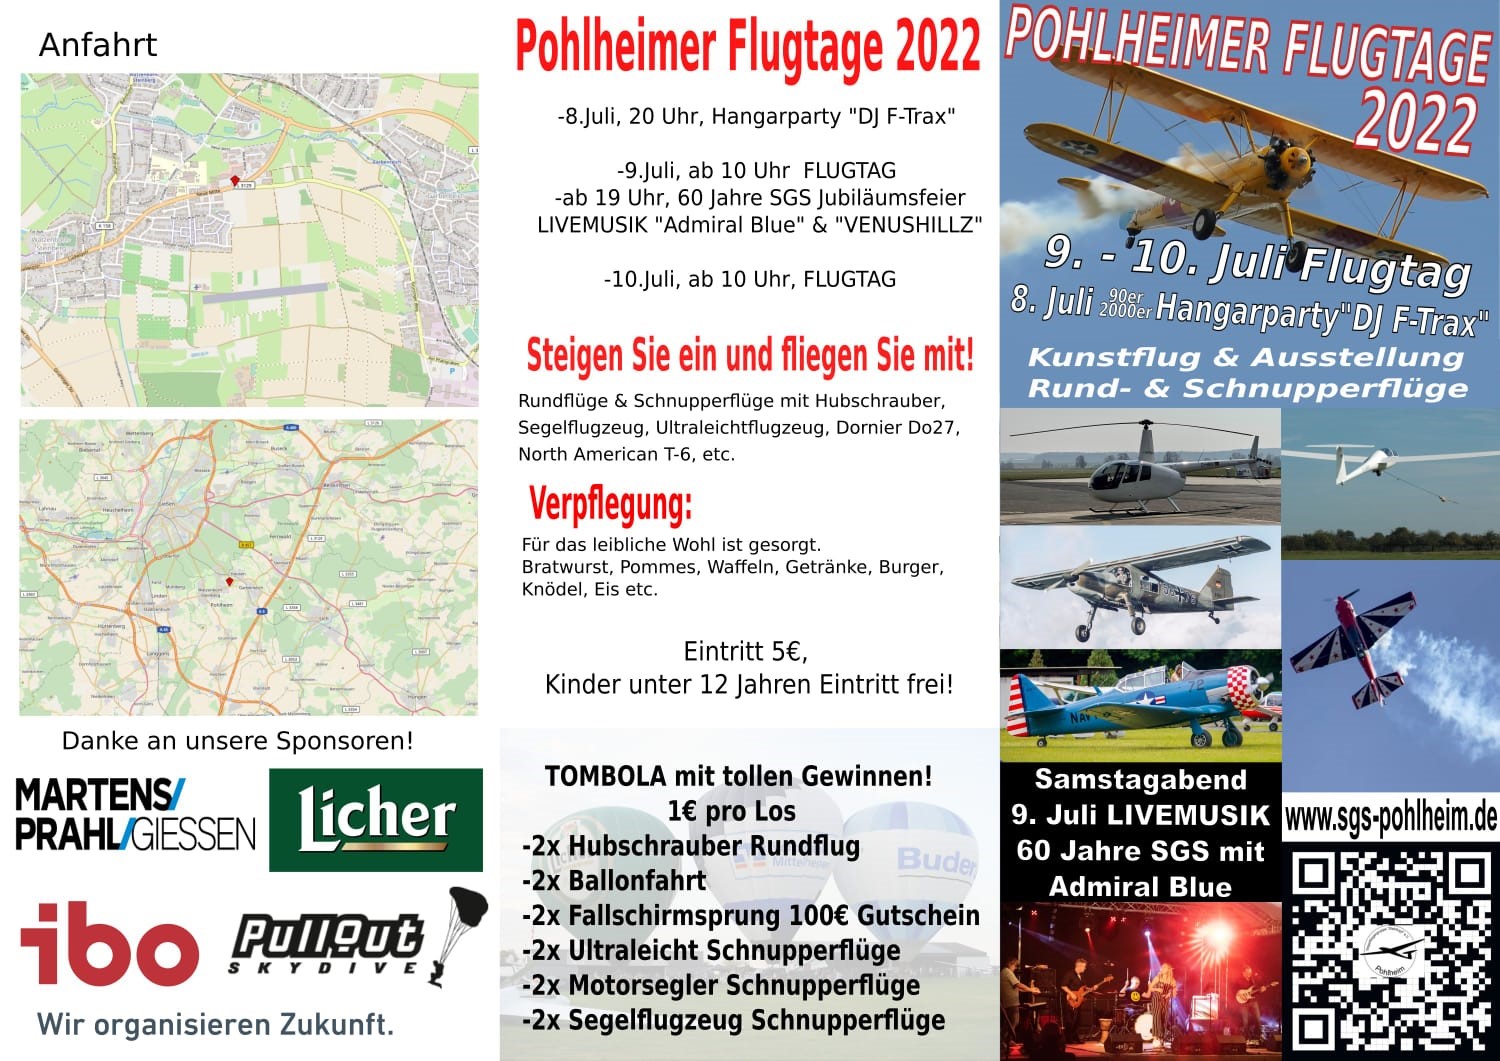 Pohlheimer Flugtage 2022 Programm